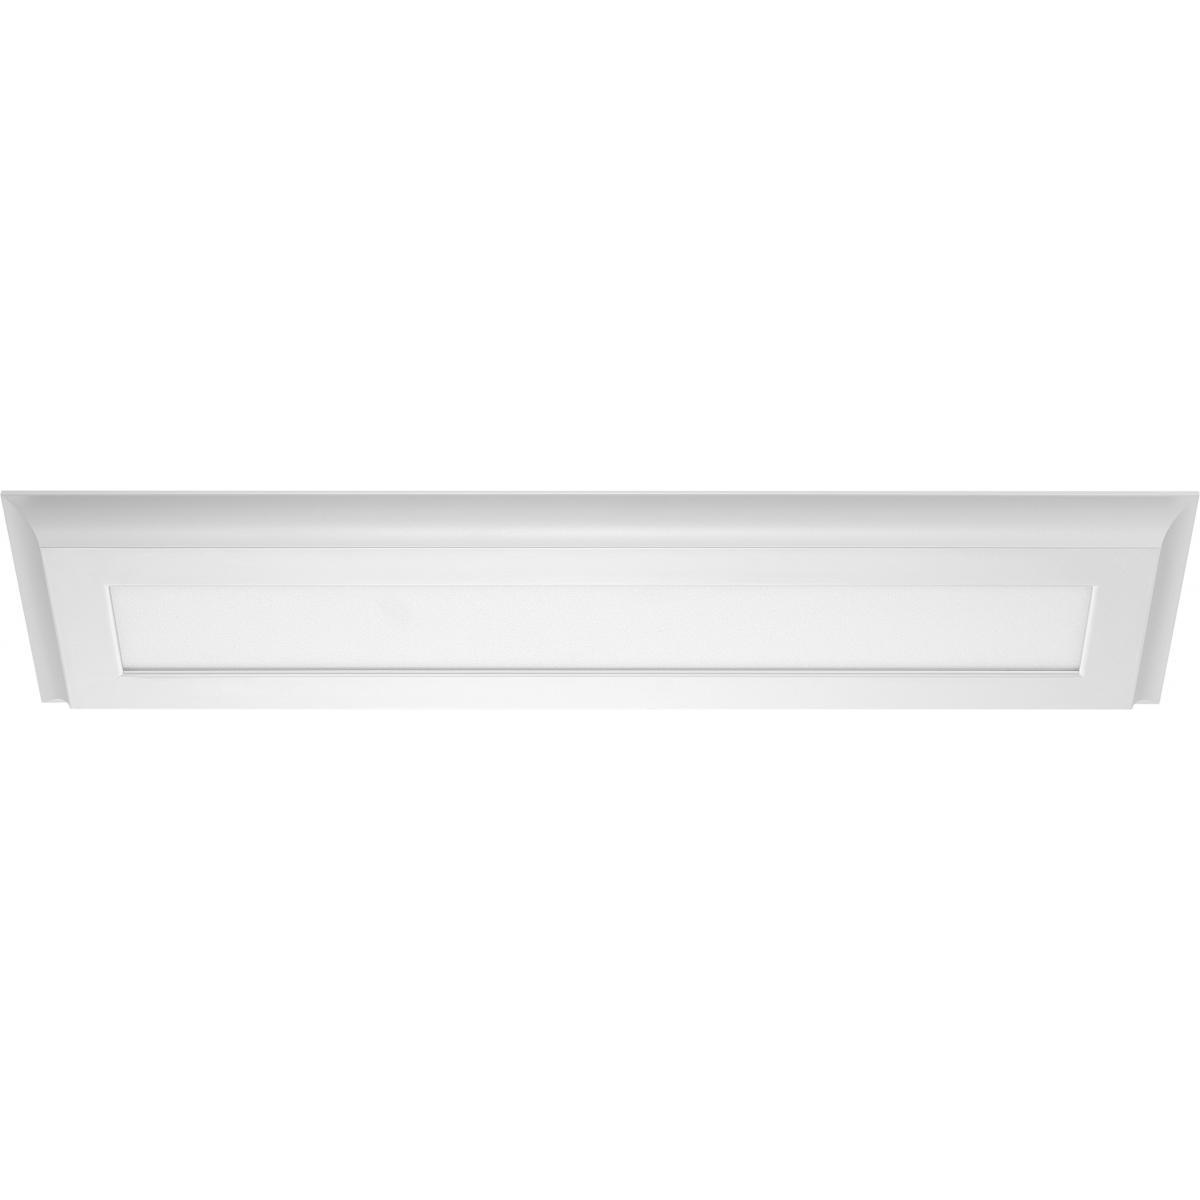 7" X 36" Surface LED Fixture - White 100-277V Ceiling Nuvo Lighting 3000K 